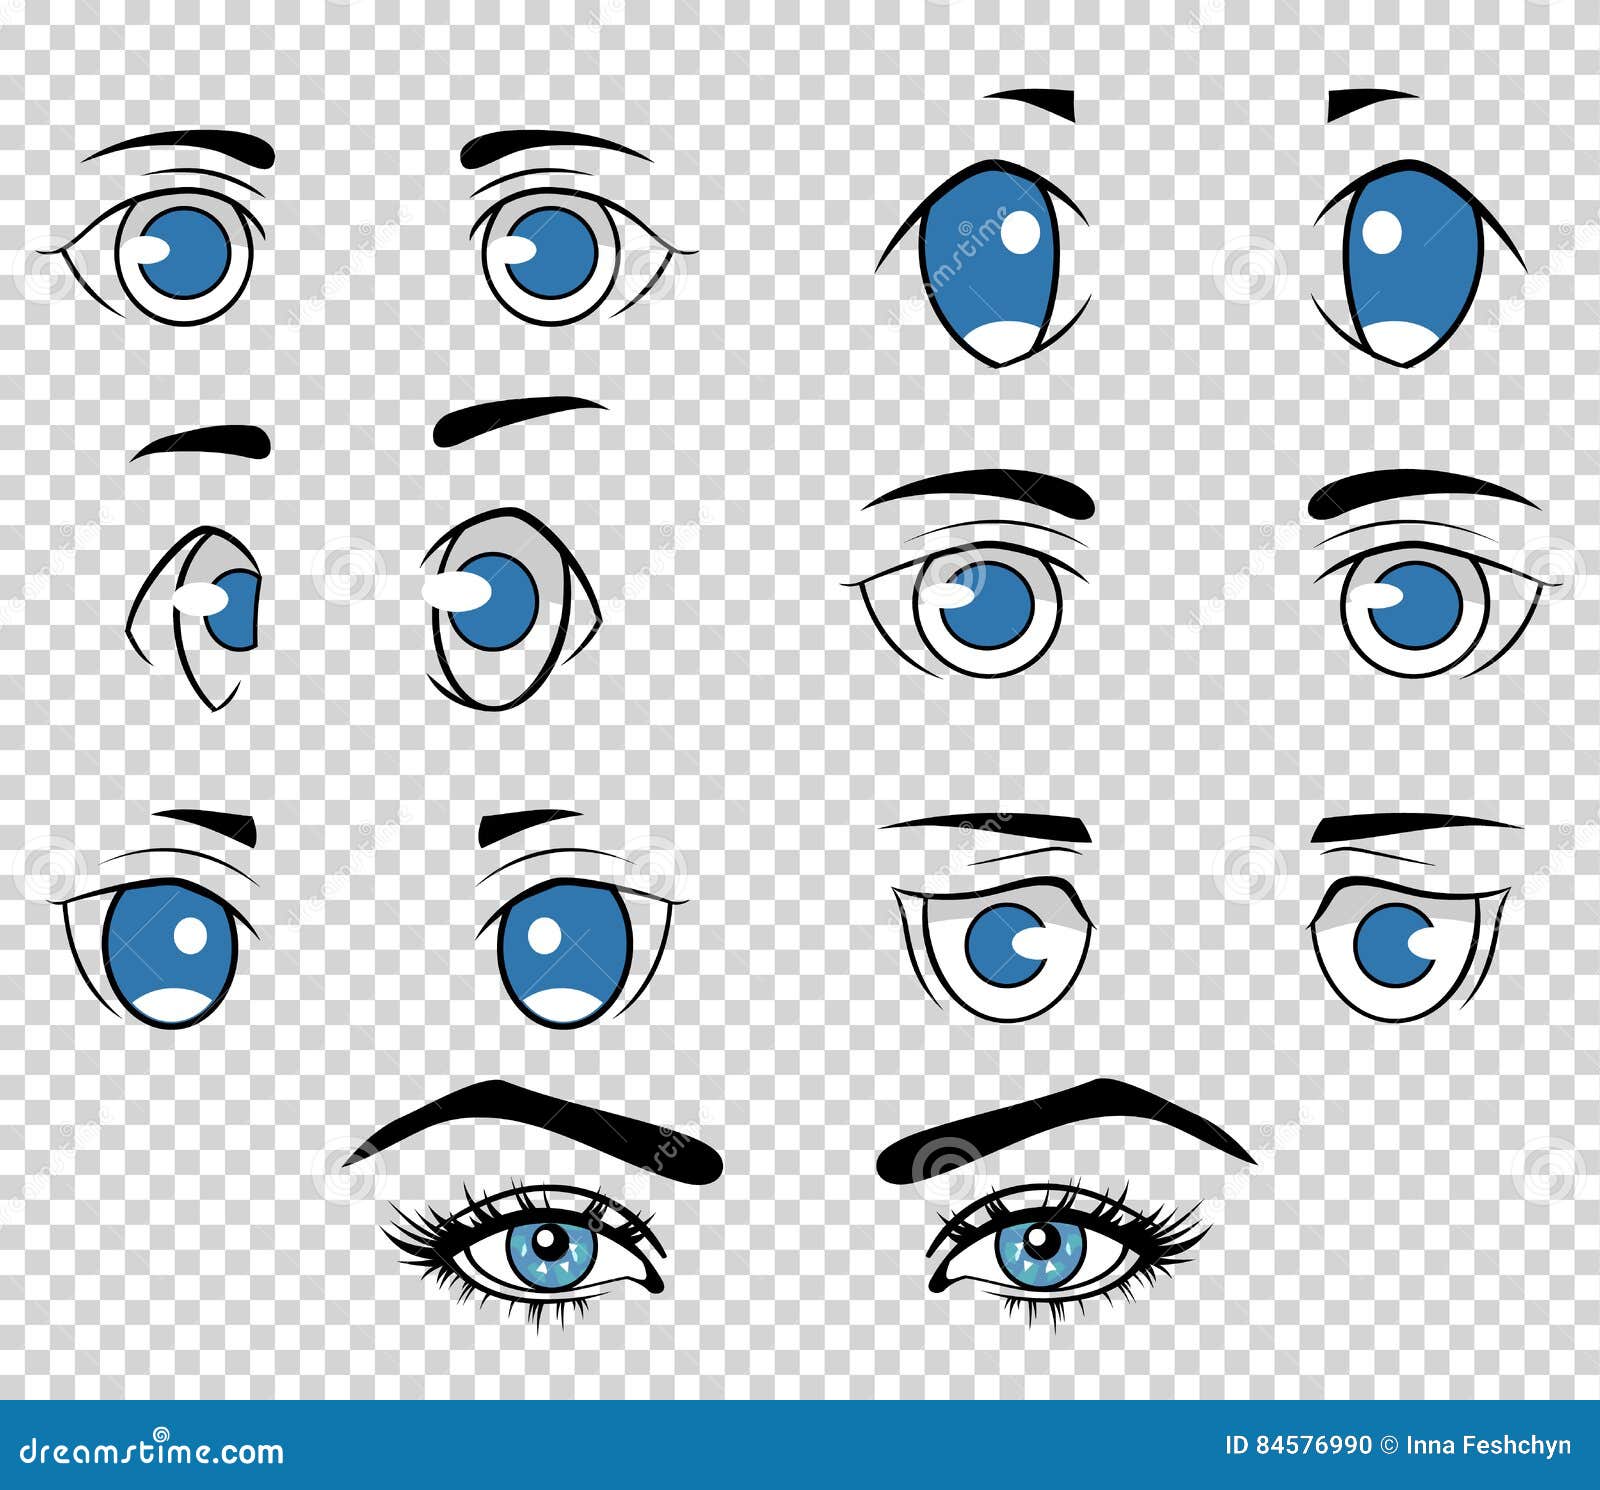 Creating an anime eye step-by-step using CLIP STUDIO PAINT by Akylha - Make  better art